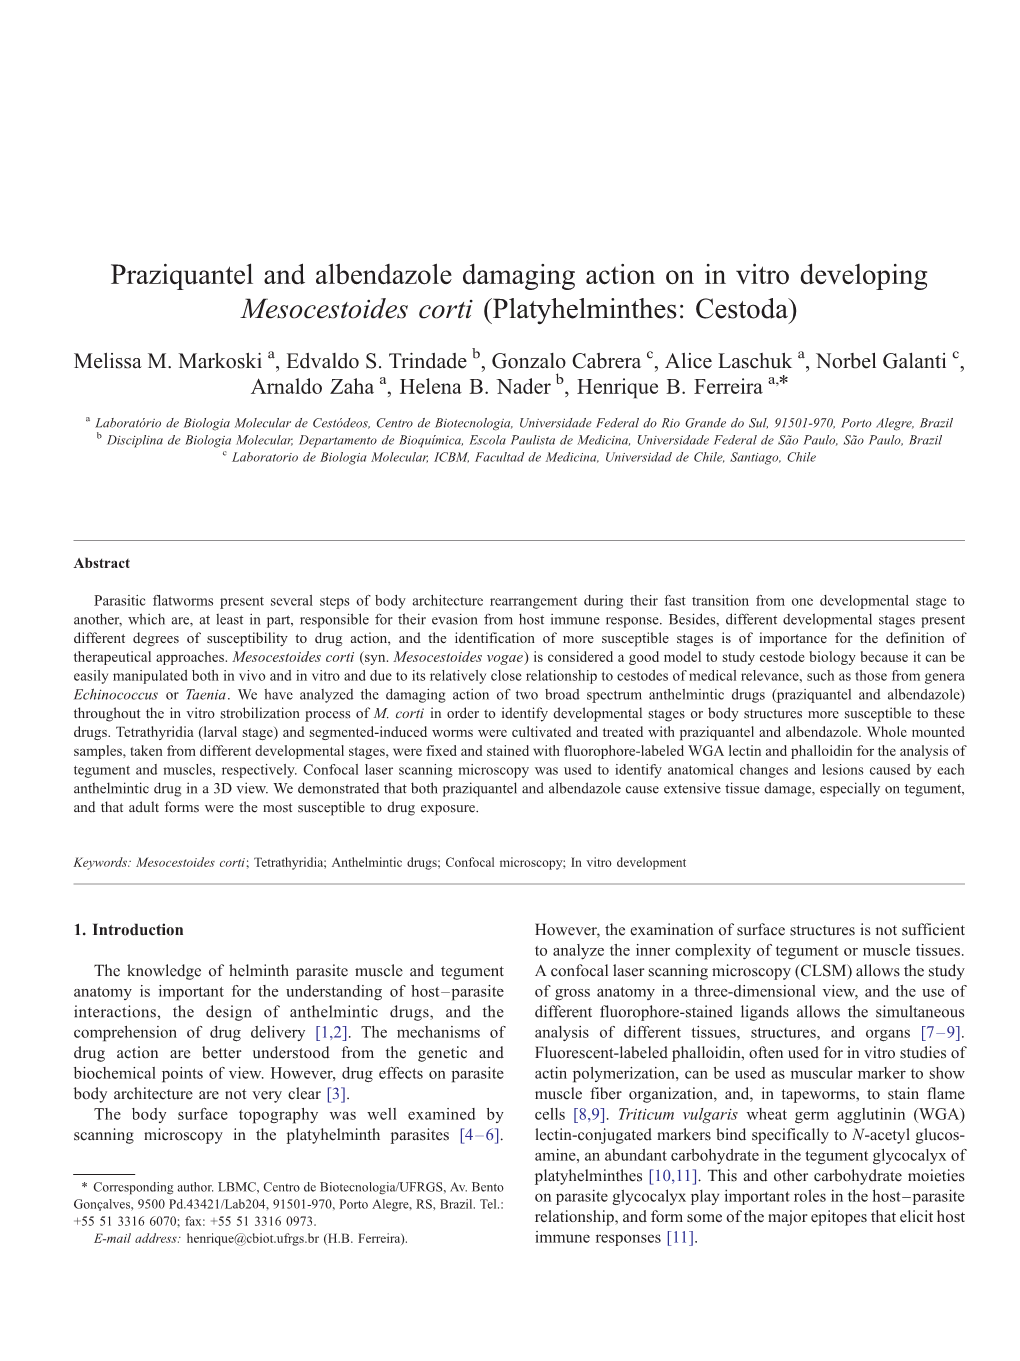 Praziquantel and Albendazole Damaging Action on in Vitro Developing Mesocestoides Corti (Platyhelminthes: Cestoda)